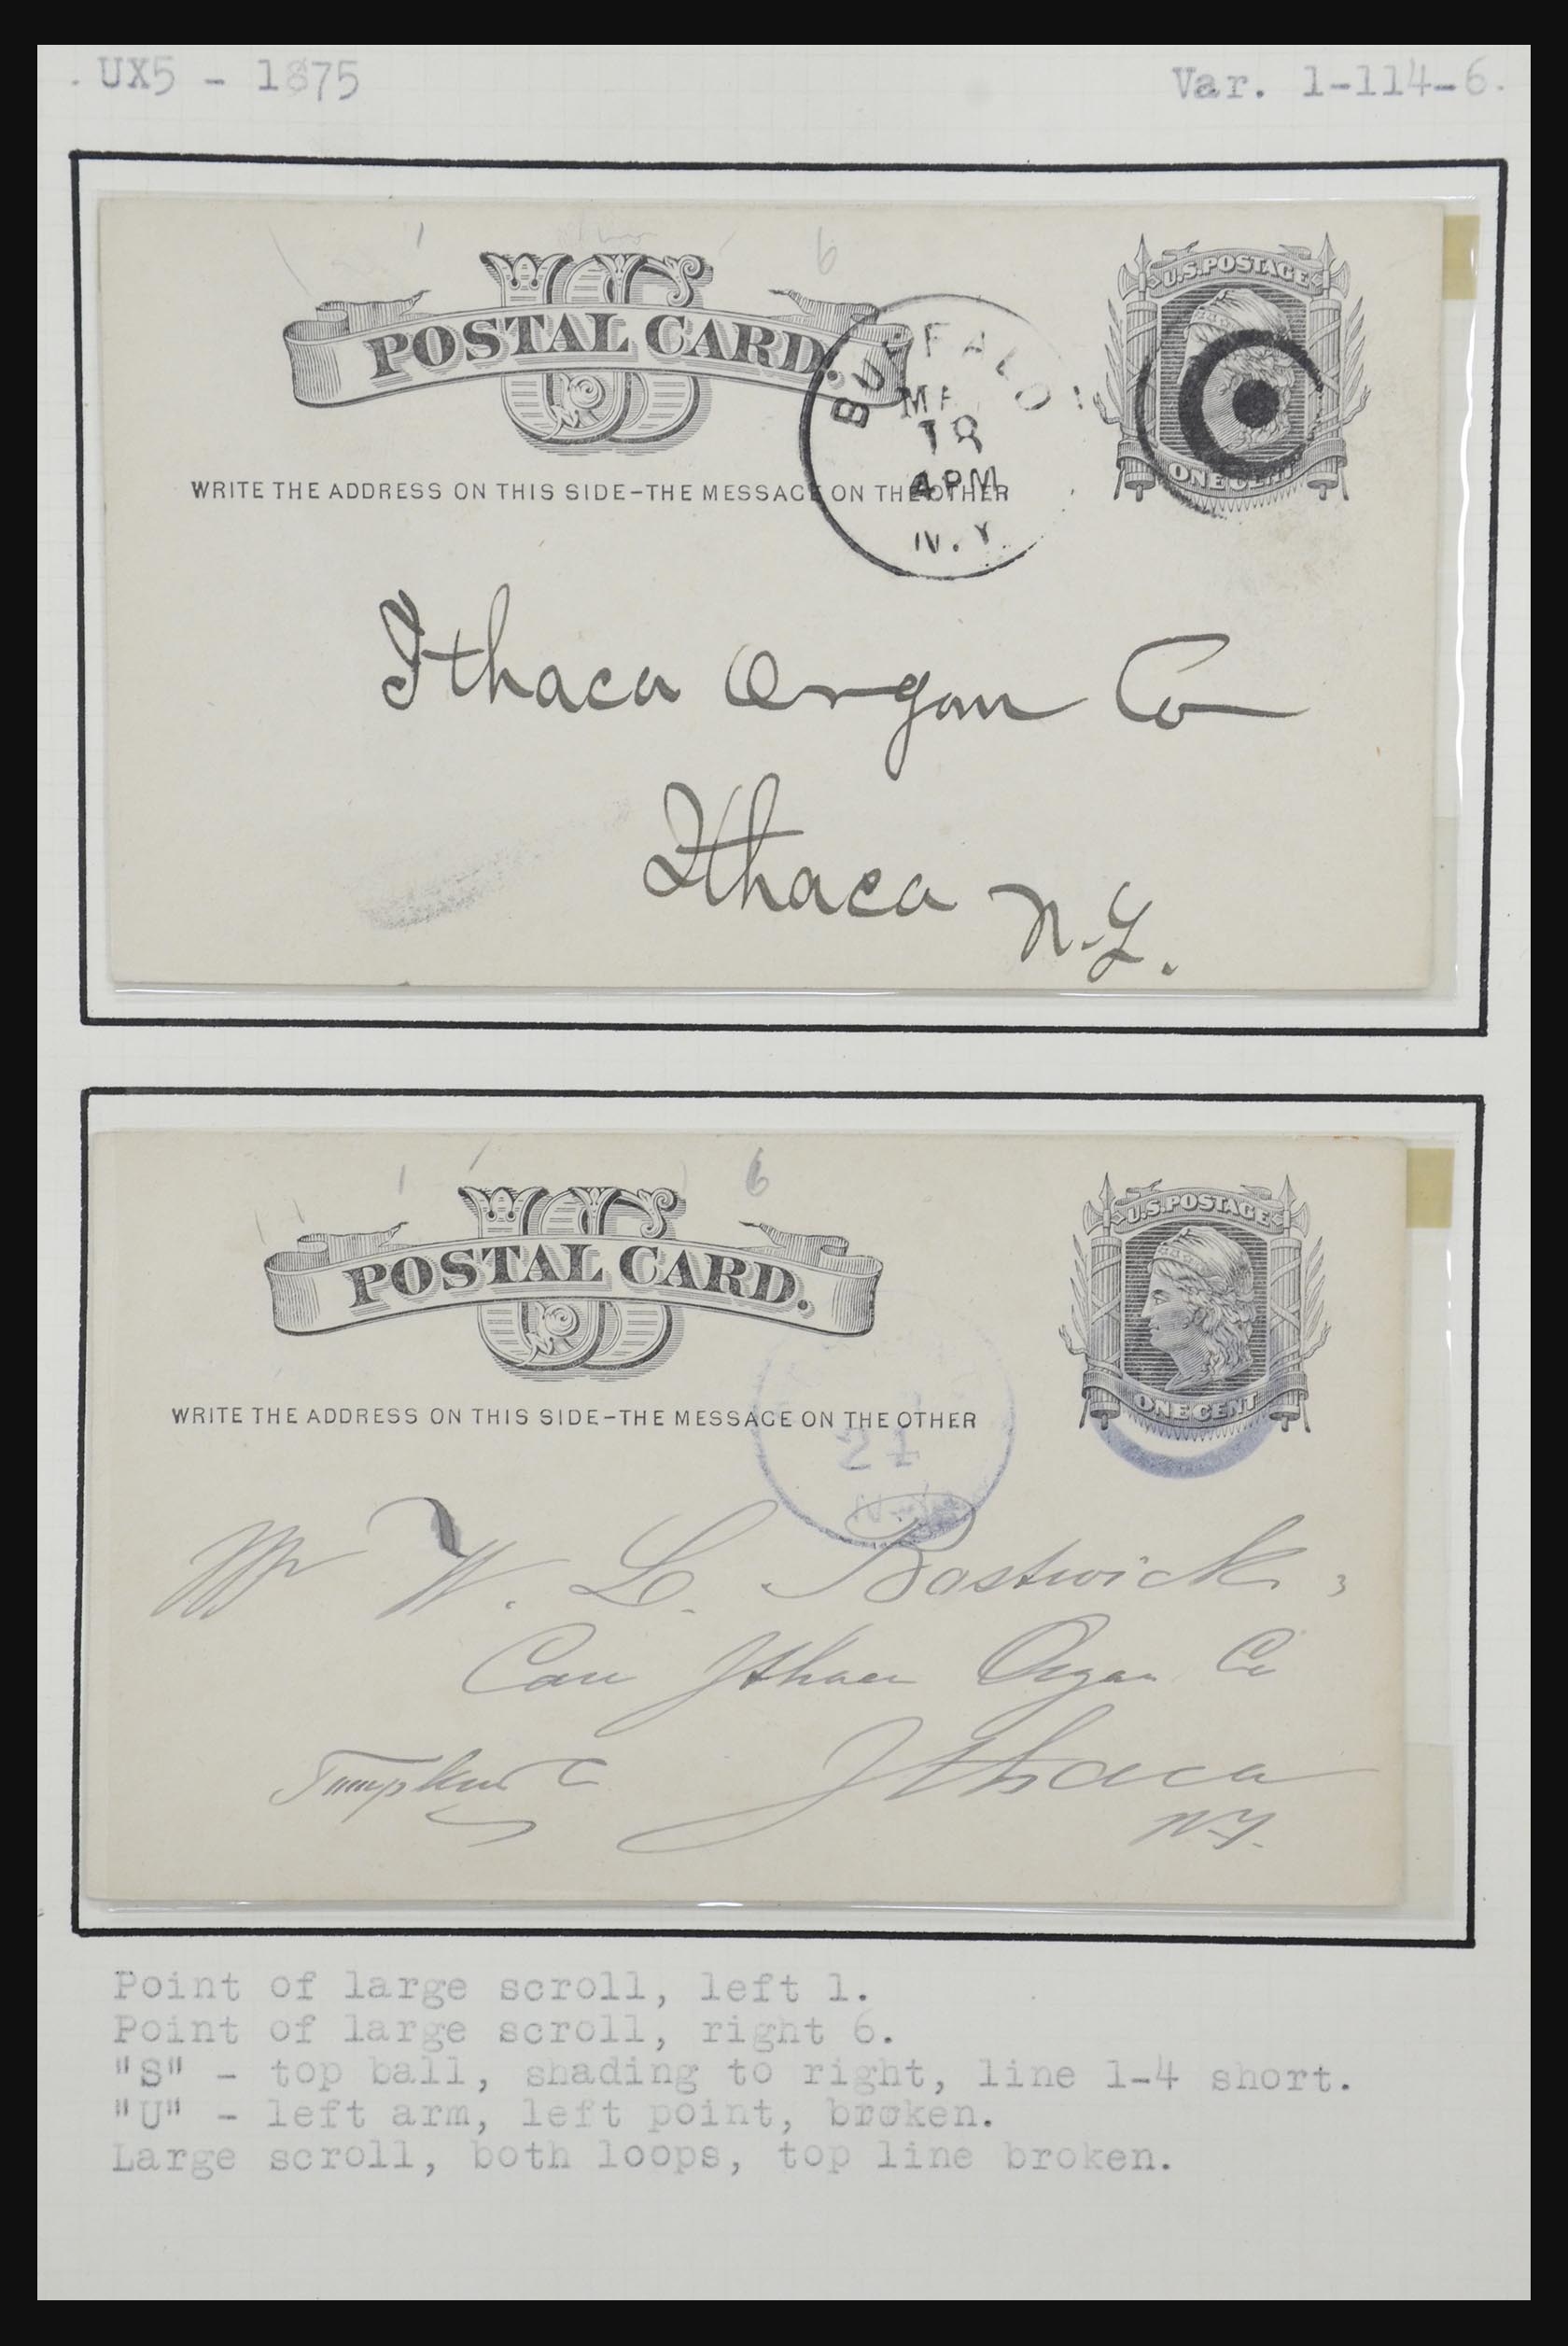 32209 079 - 32209 USA postal cards 1873-1950.